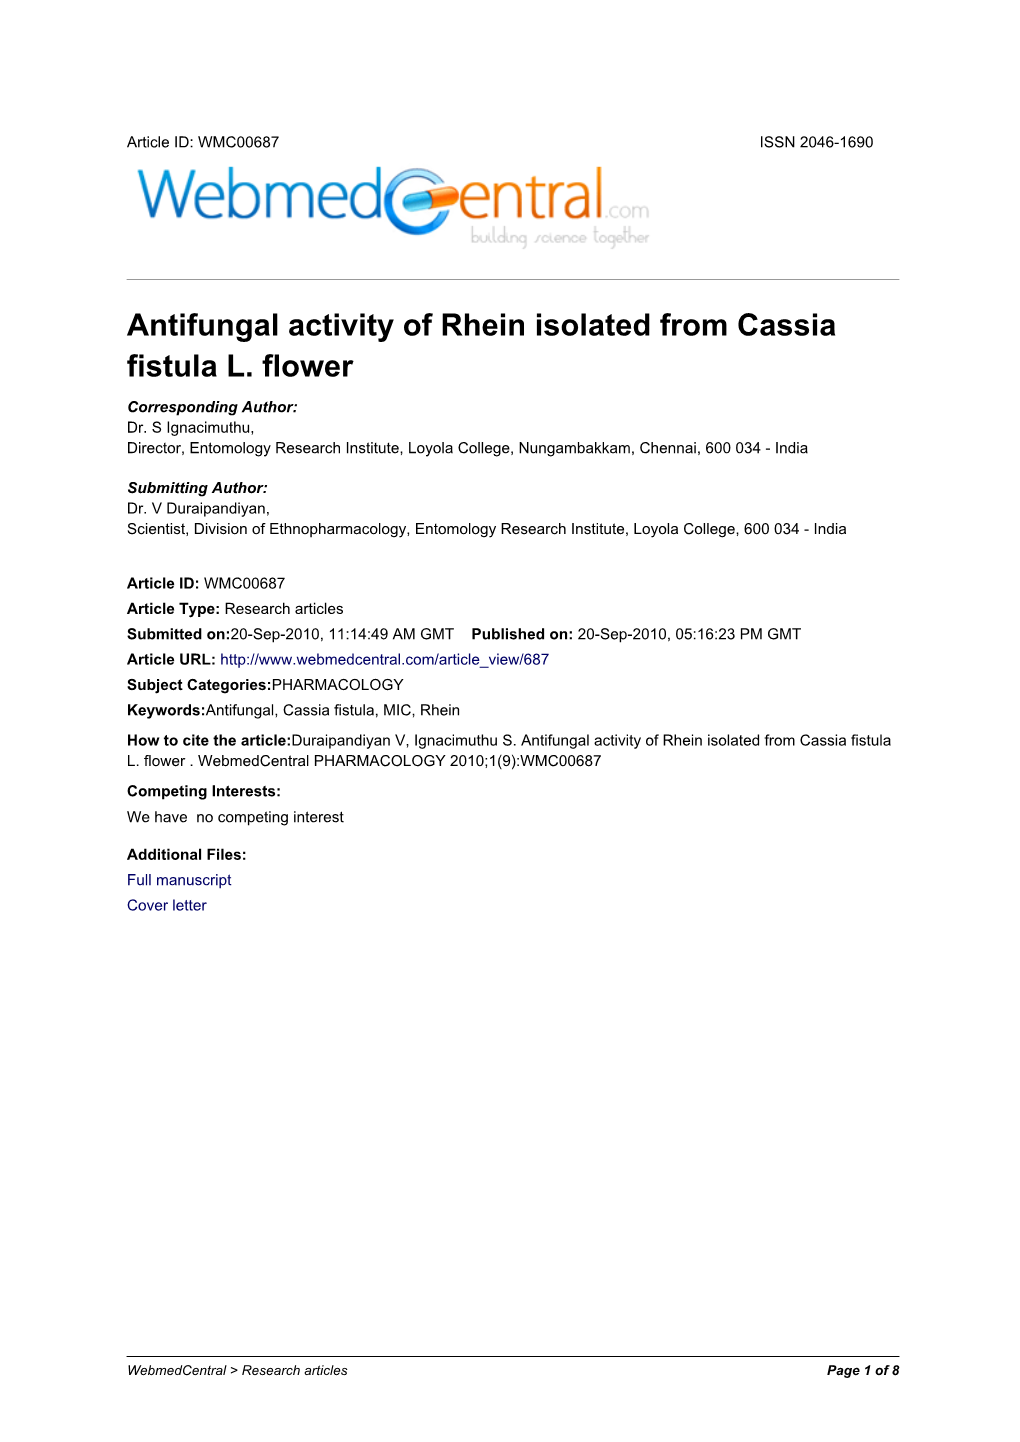 Antifungal Activity of Rhein Isolated from Cassia Fistula L. Flower